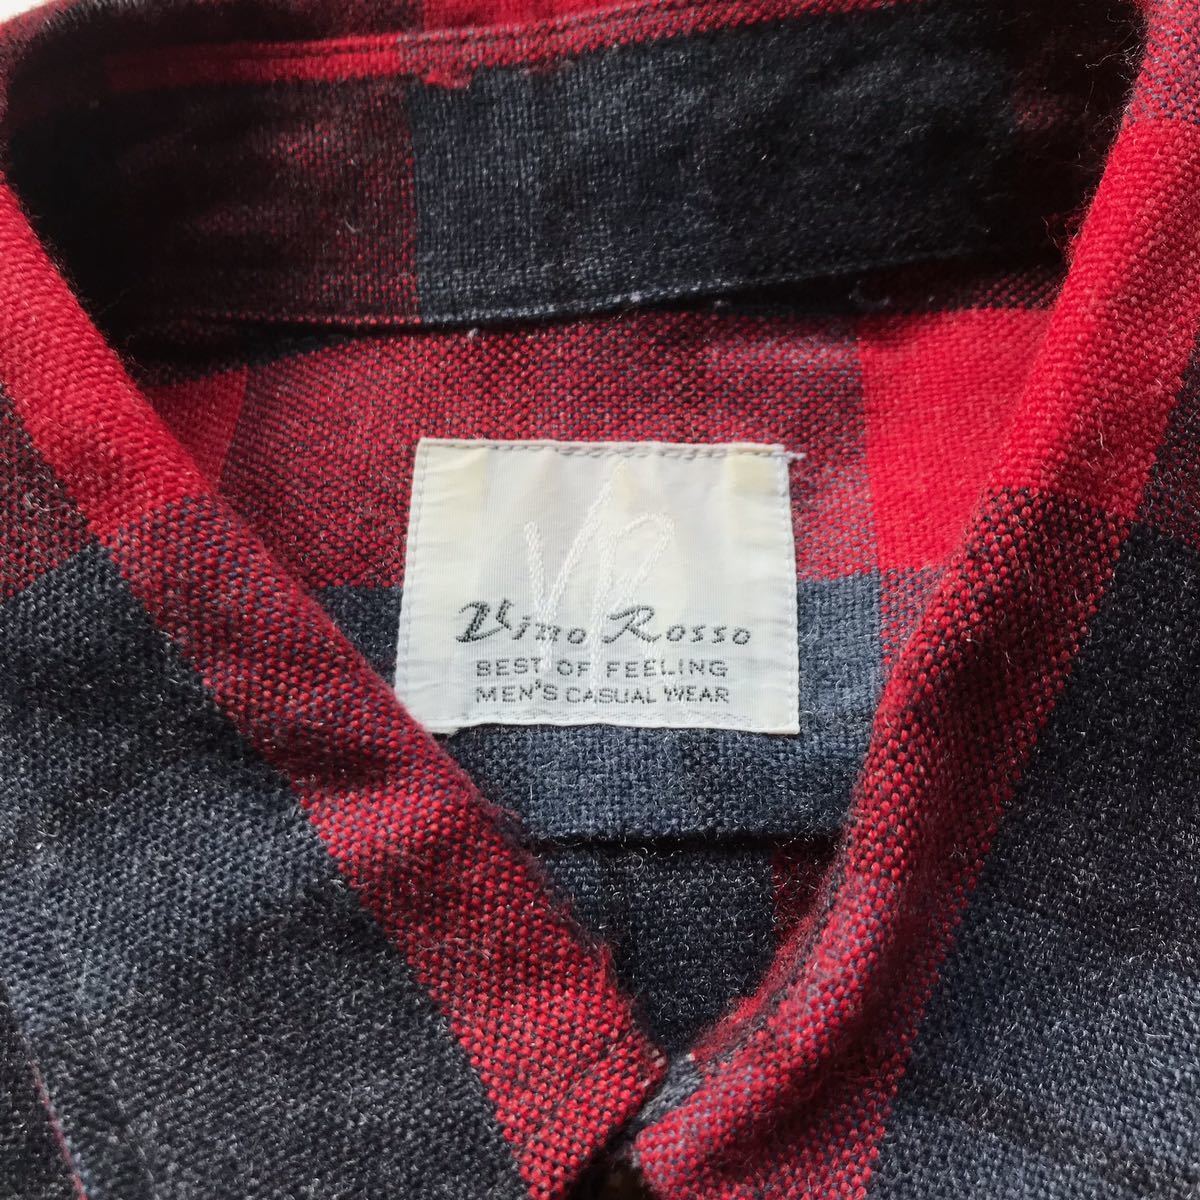 Vino Rosso ネルシャツ 578-1-33 メンズ レッド ブラック チェック ショッピング レジャー_画像4